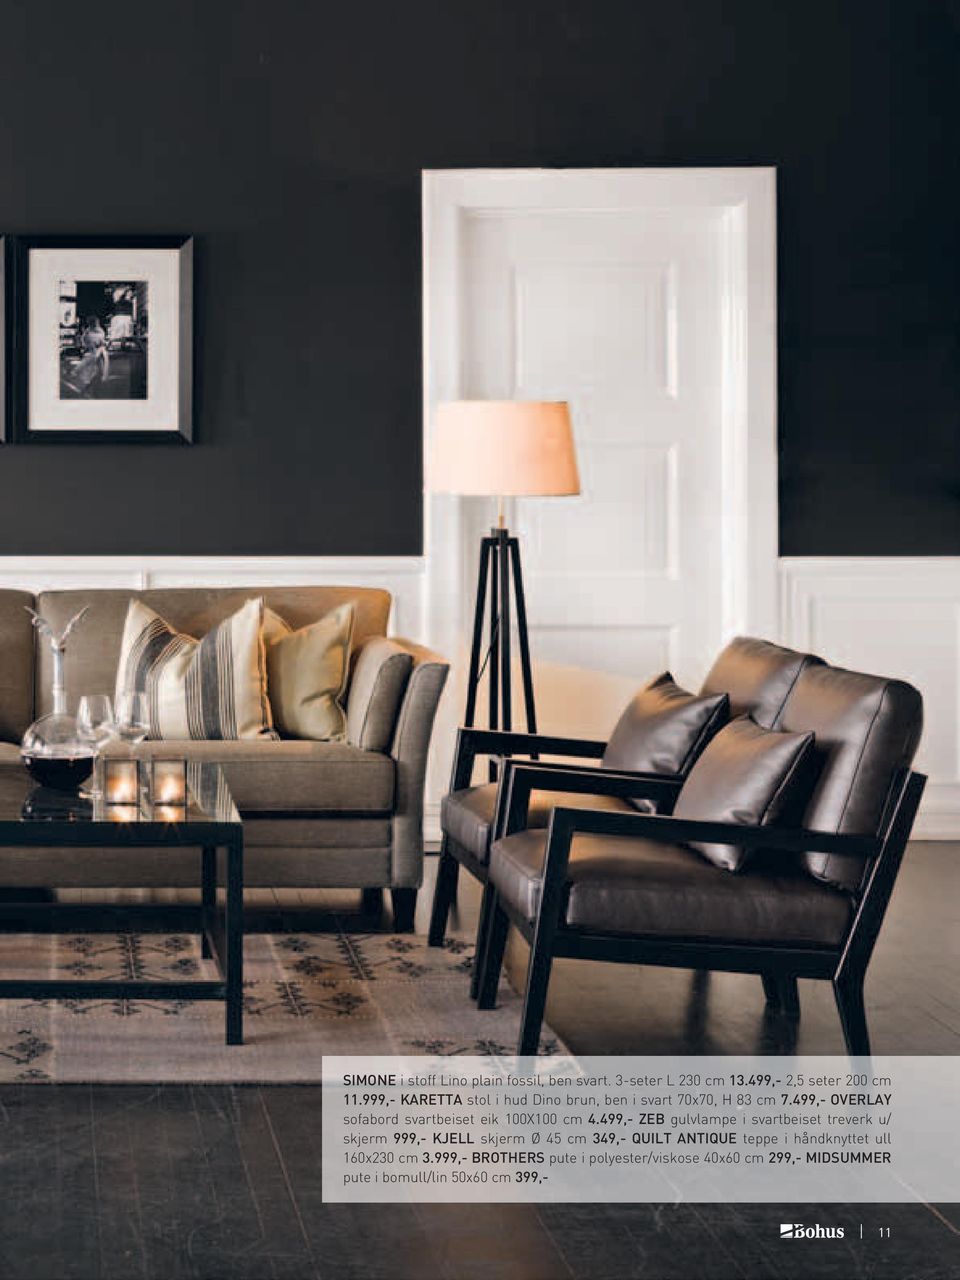 499,- overlay sofabord svartbeiset eik 100X100 cm 4.